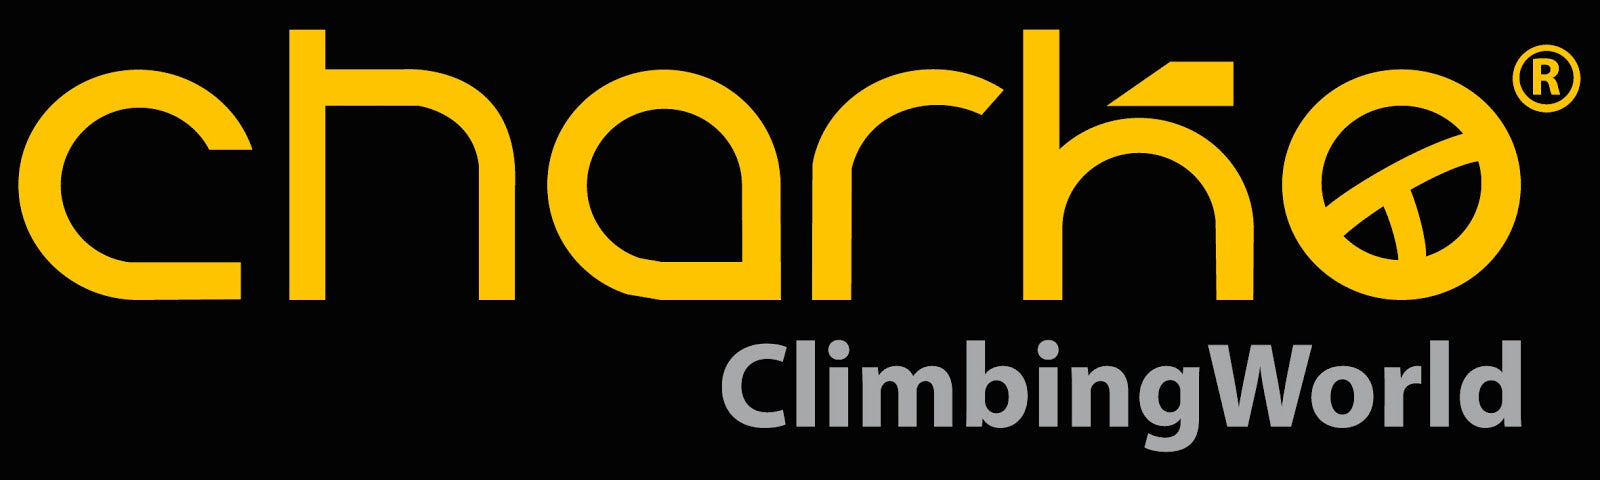 Charko logo